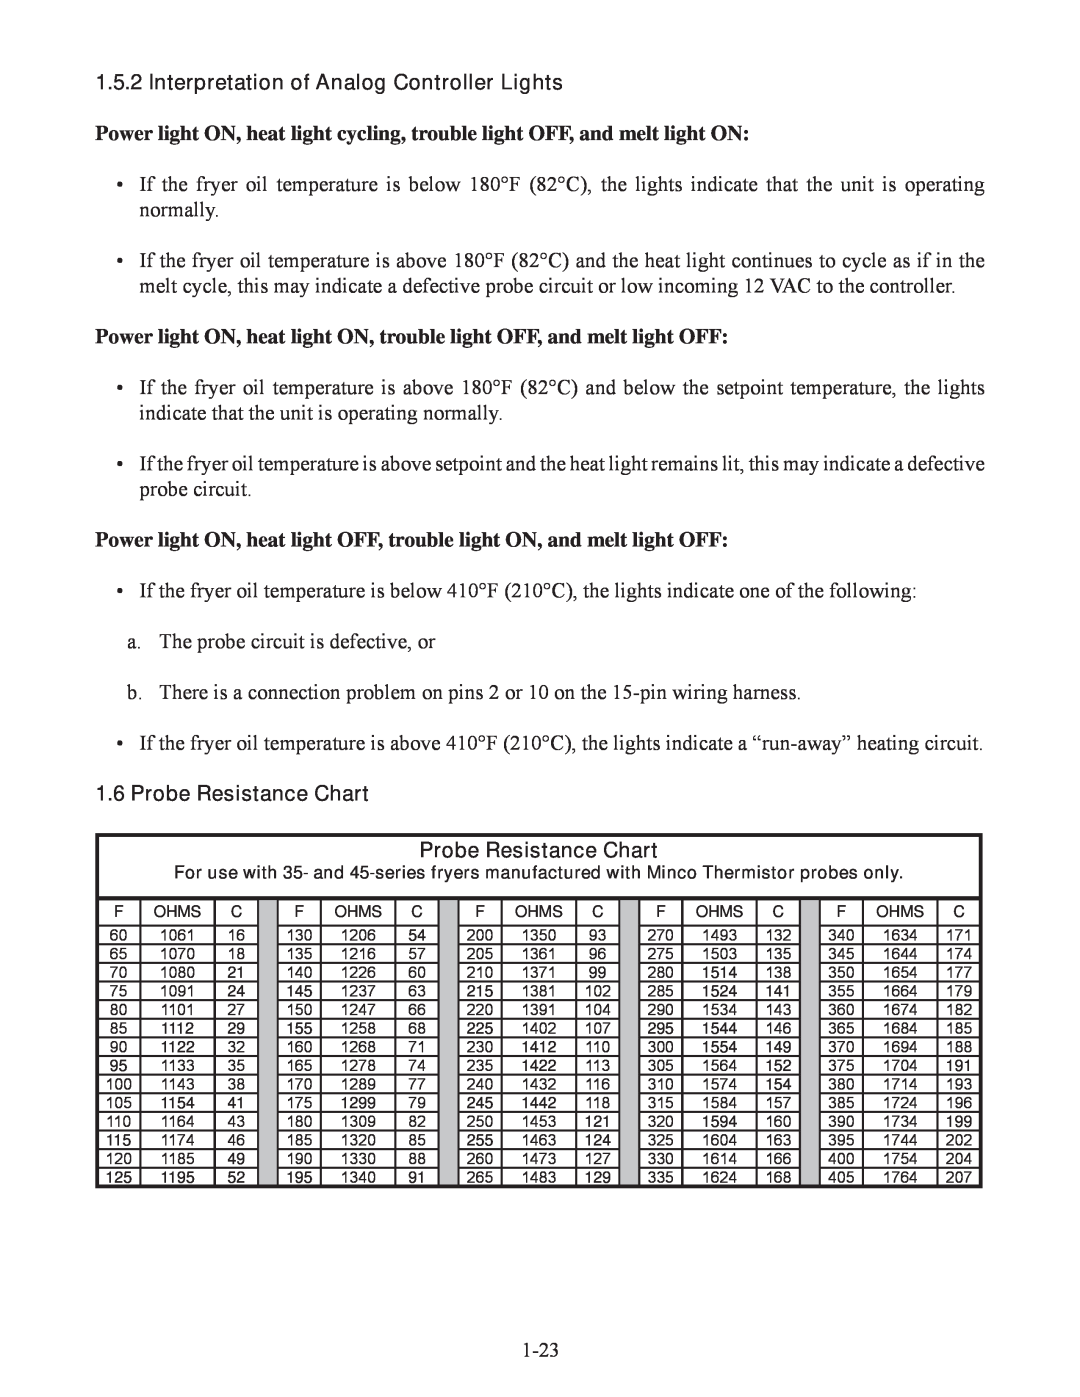 Frymaster 35, 45 manual Interpretation of Analog Controller Lights, Probe Resistance Chart Probe Resistance Chart 